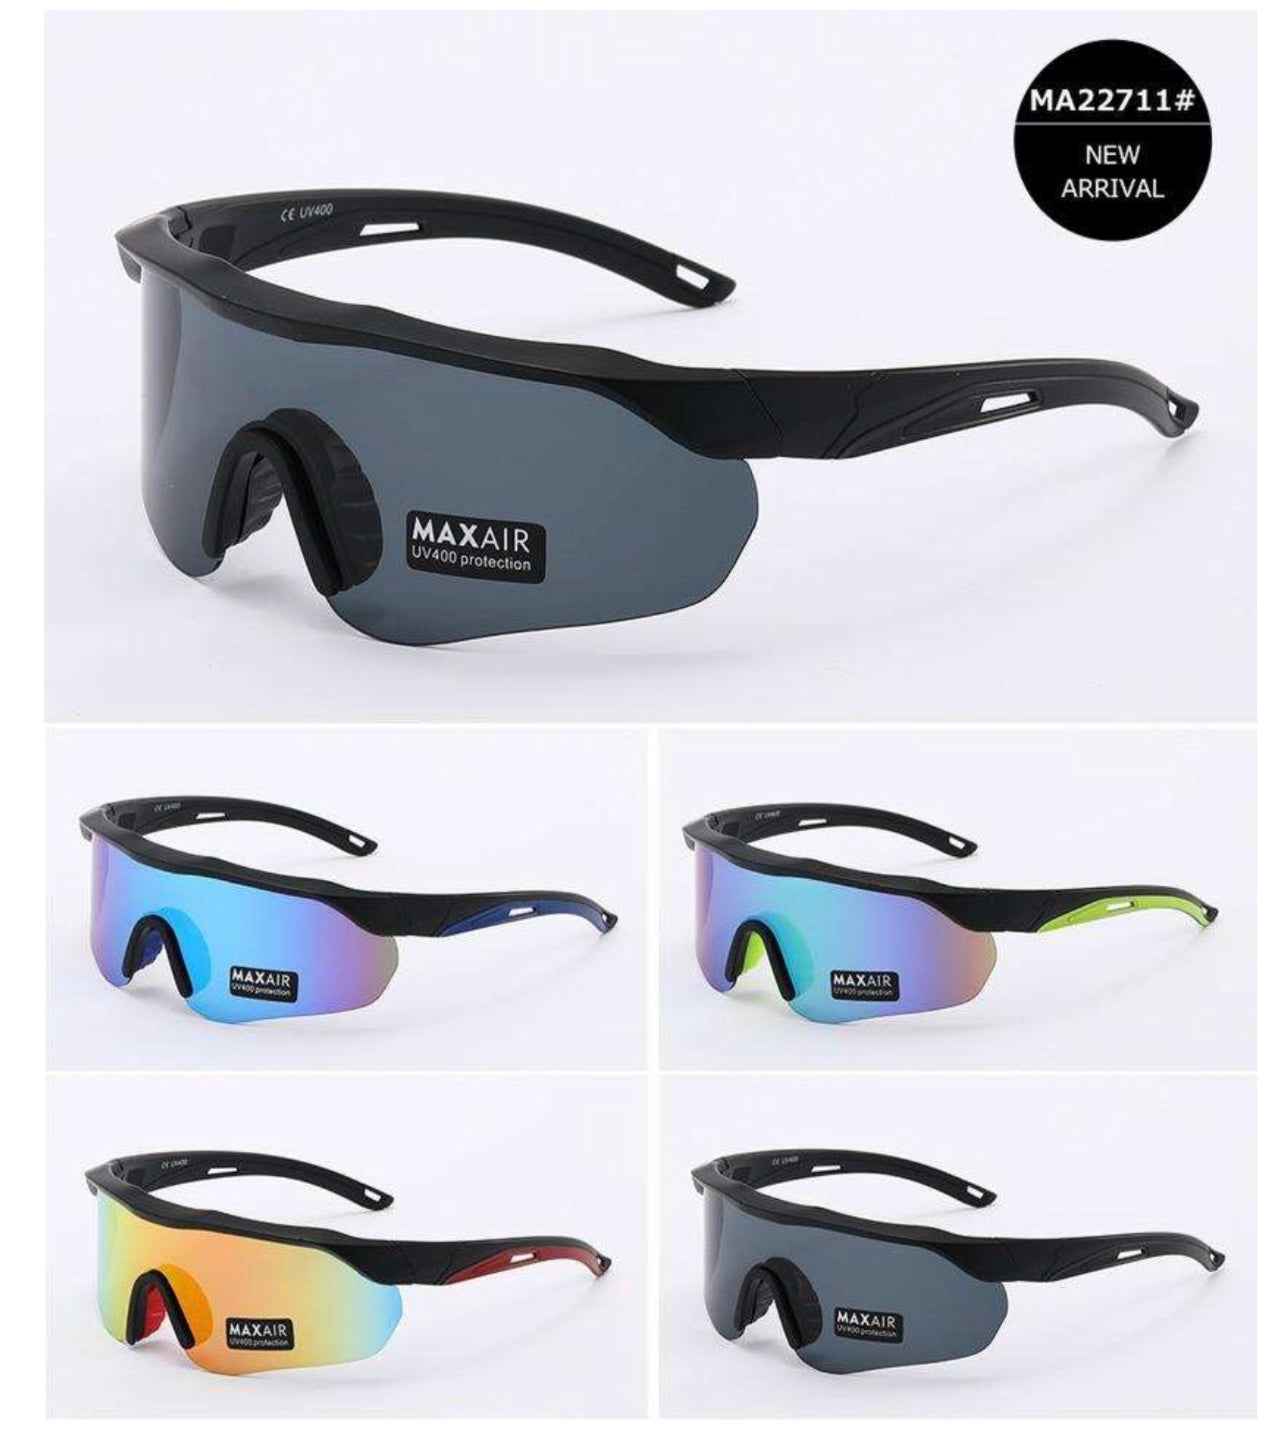 Maxair 22711 Sunglasses